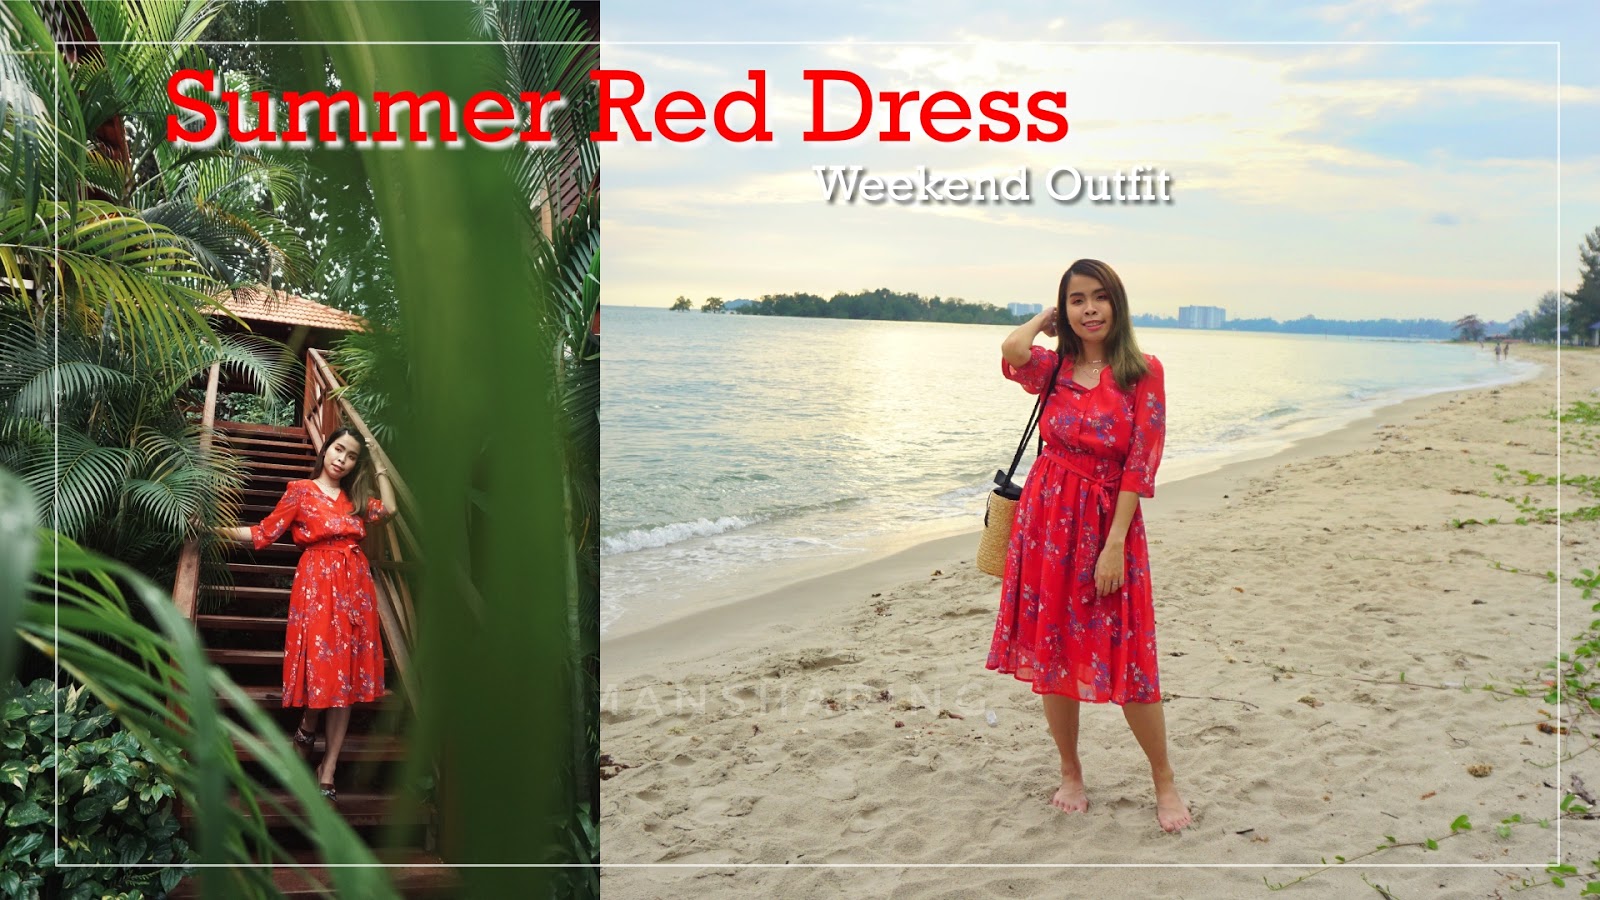 Red Beach Dress Weekend Outfit #91 | Snowman · Sharing